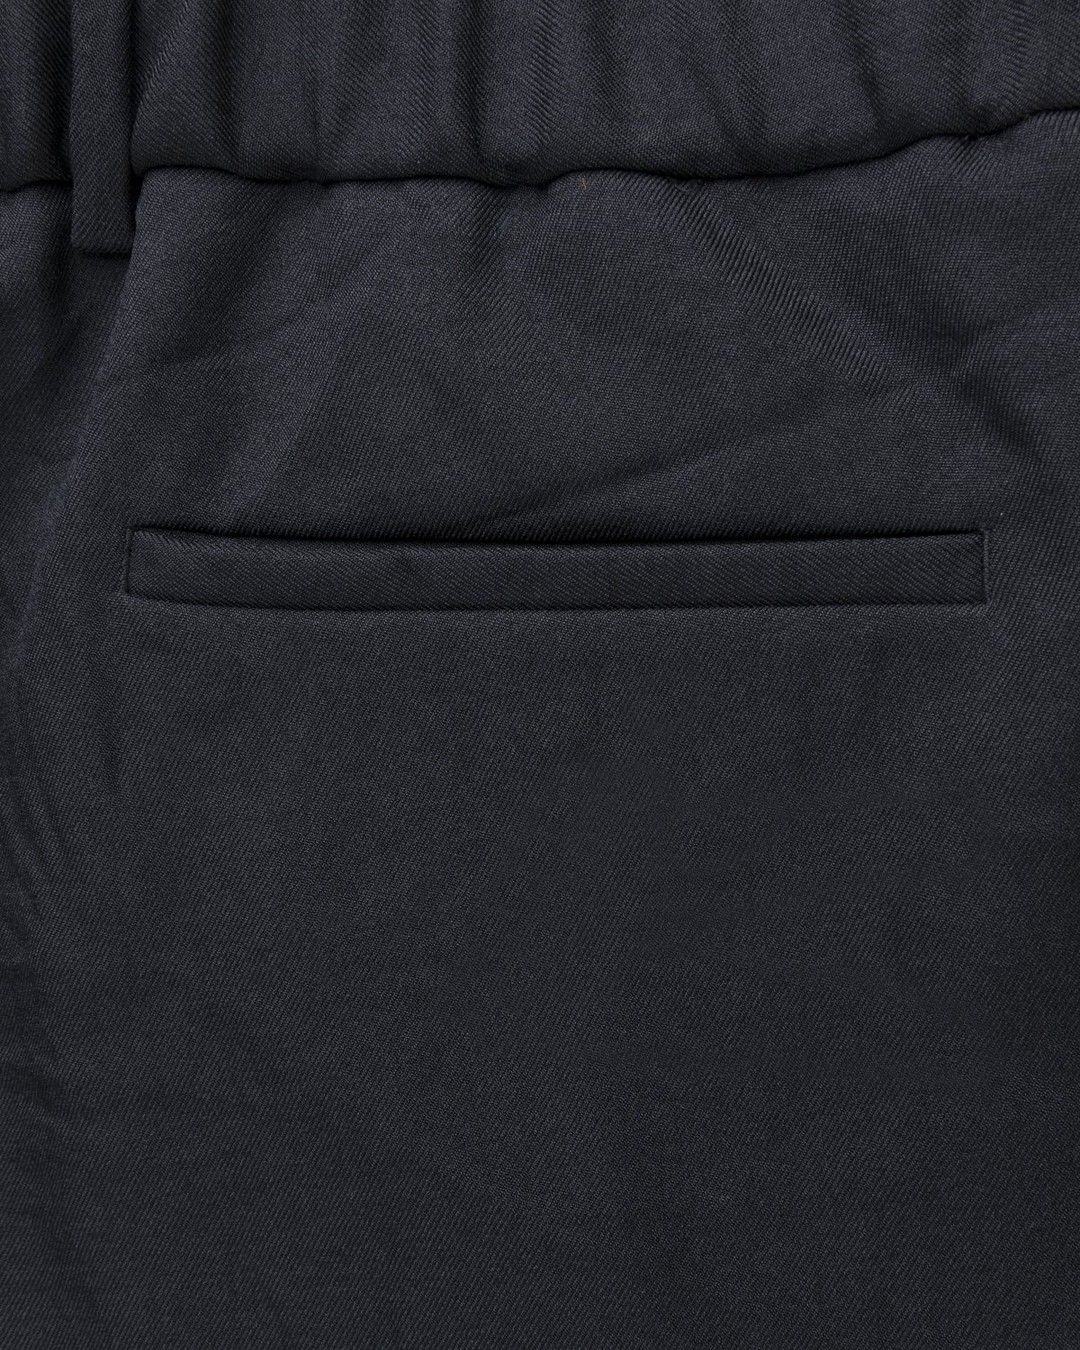 Jil Sander – Trousers Black - Trousers - Black - Image 4